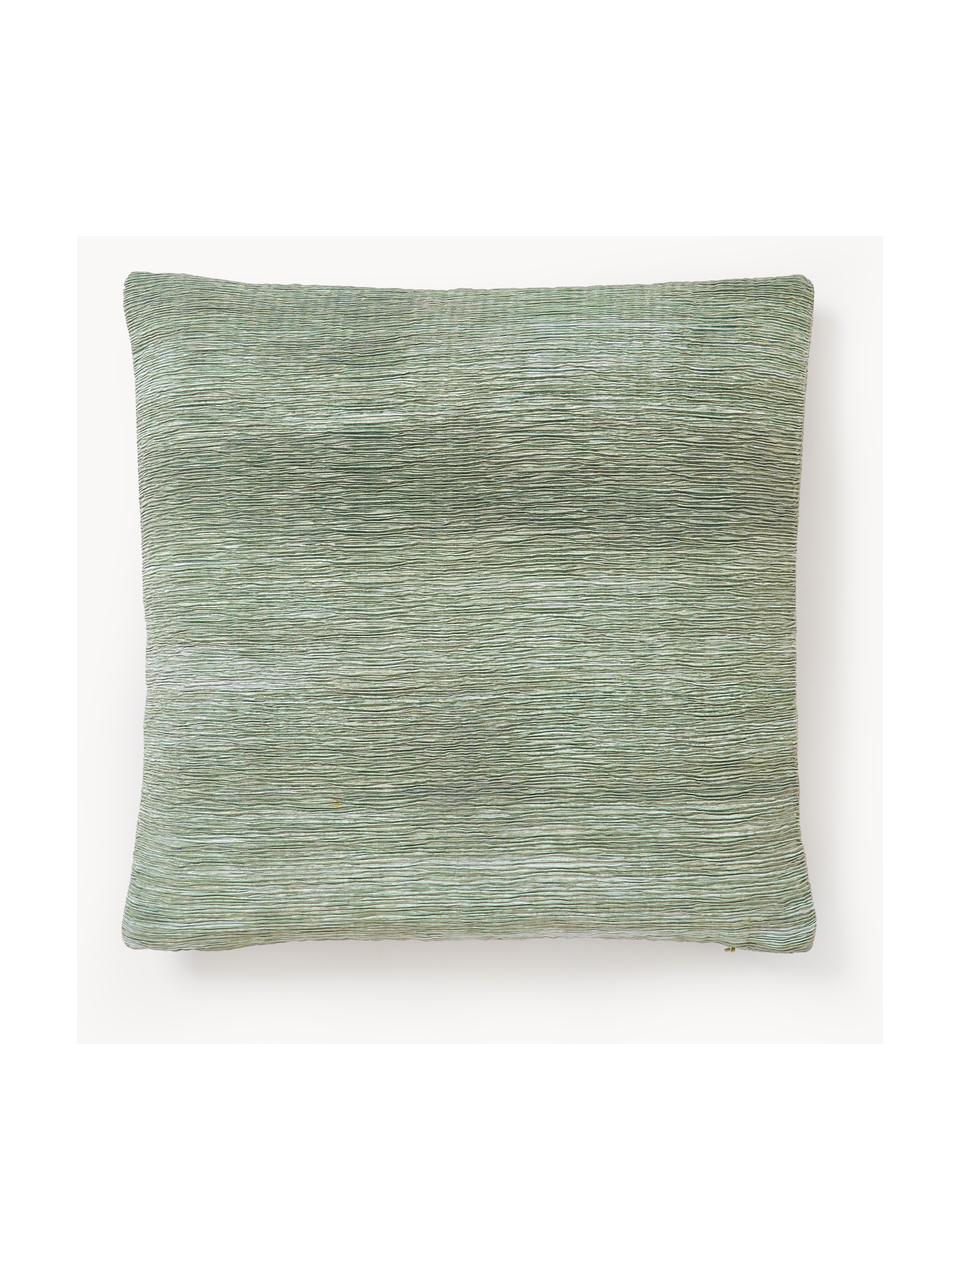 Kissenhülle Aline mit strukturierter Oberfläche, 100 % Polyester, Hellgrün, B 40 x L 40 cm